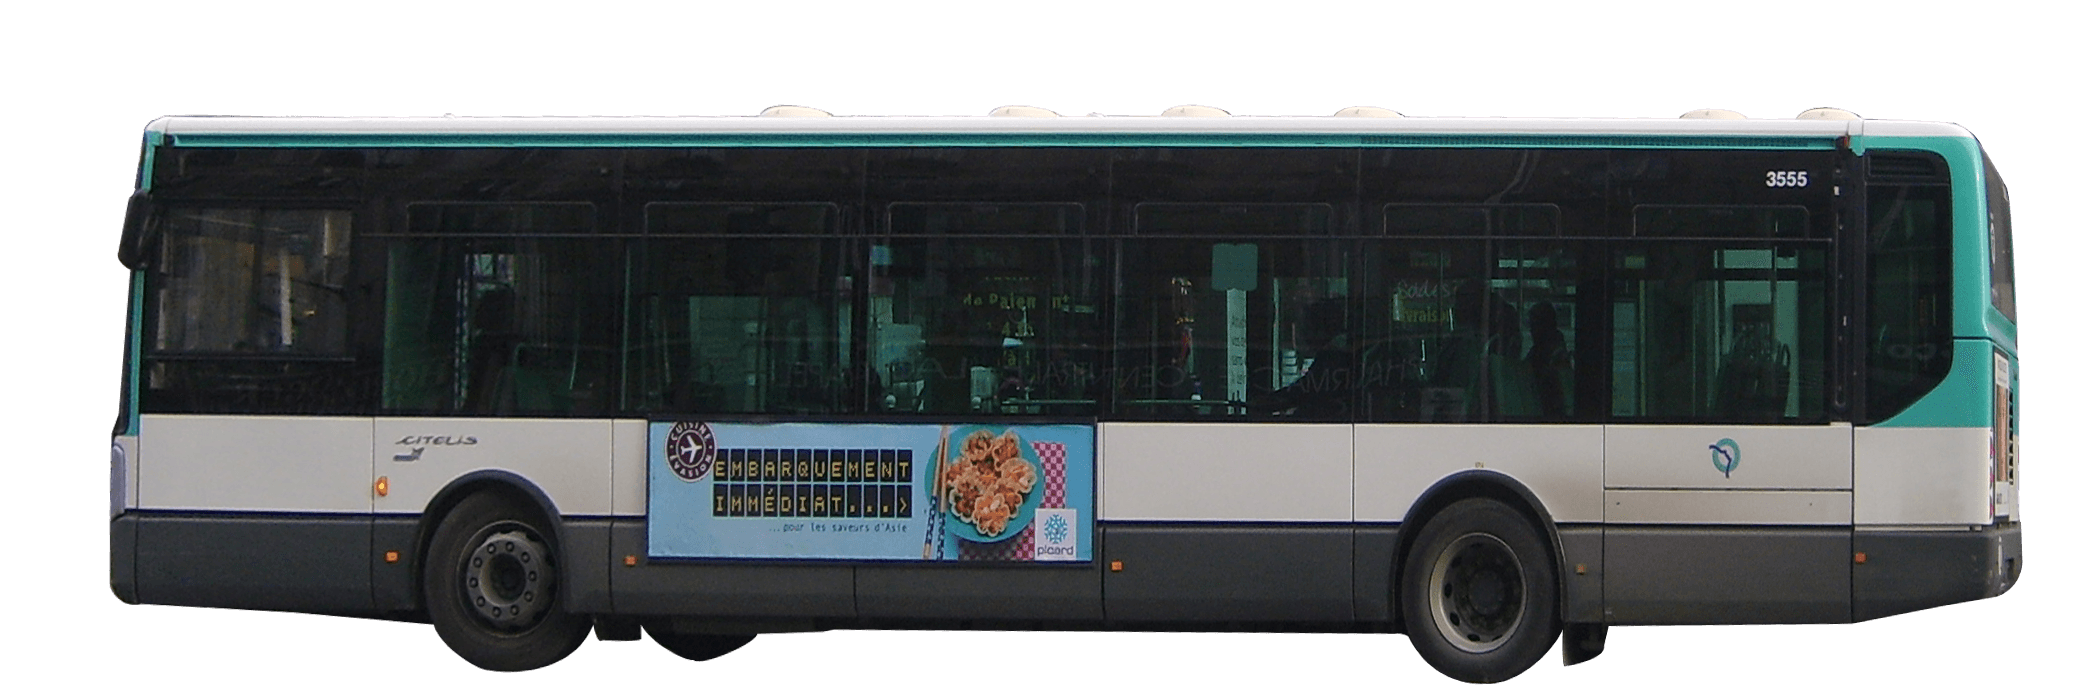 Bus Png Image PNG Image